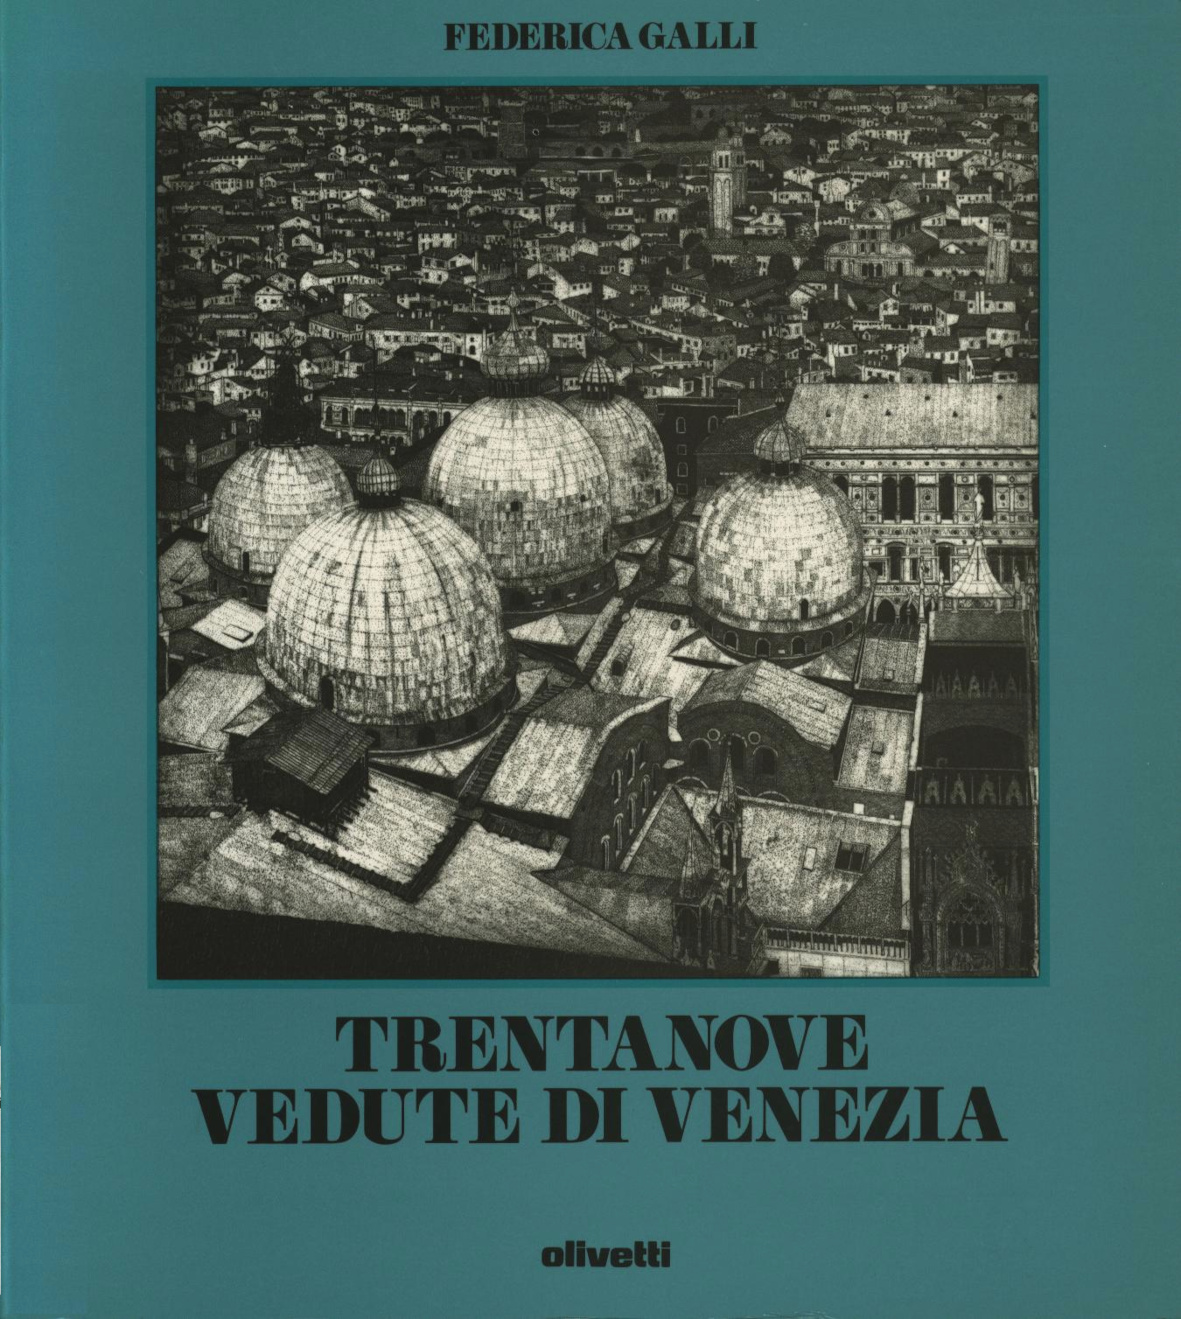 Trentanove vedute di Venezia (Thirty-nine Views of Venice)